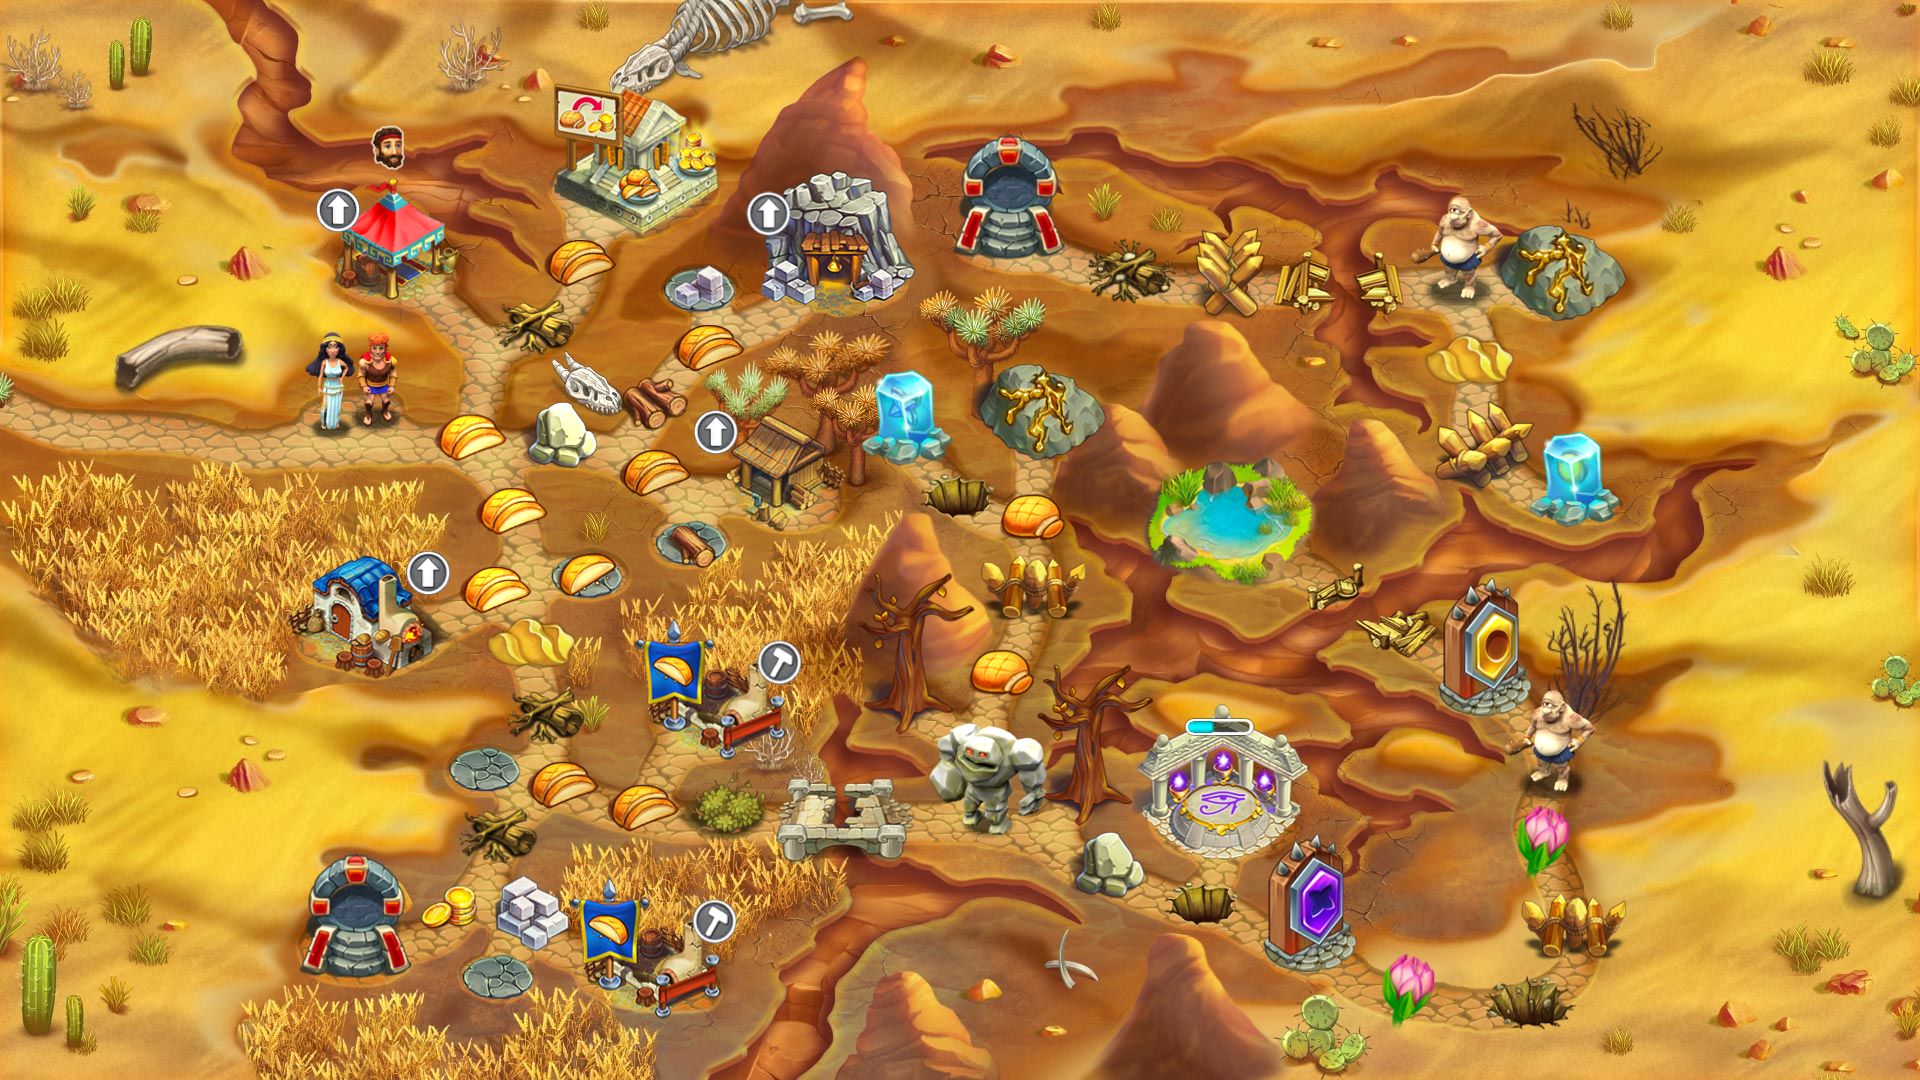 Argonauts 4: Glove of Midas - Android game screenshots.